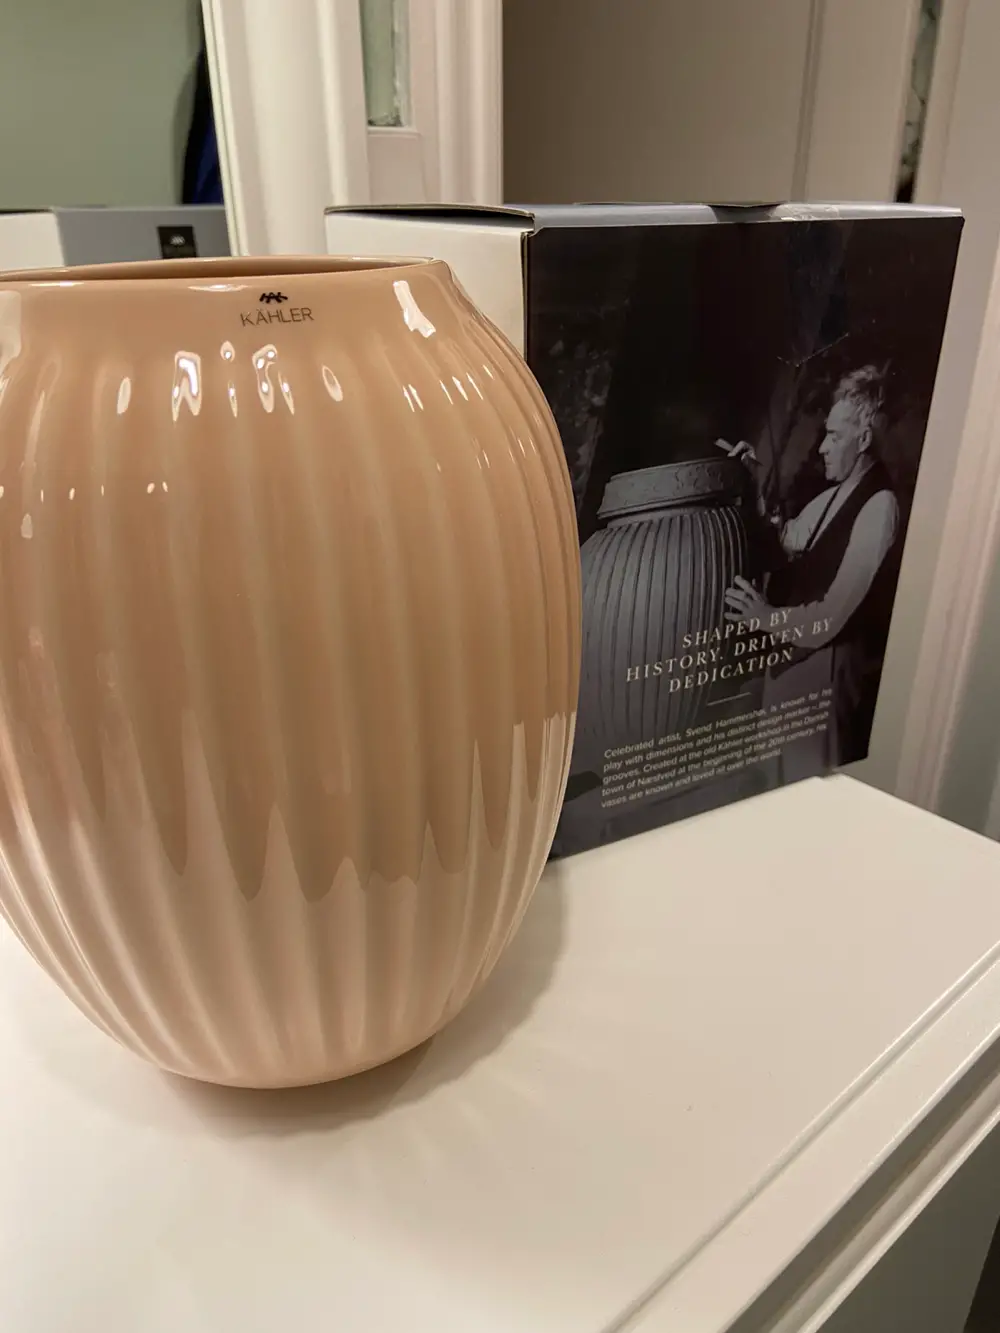 Kähler Vase - 20 cm